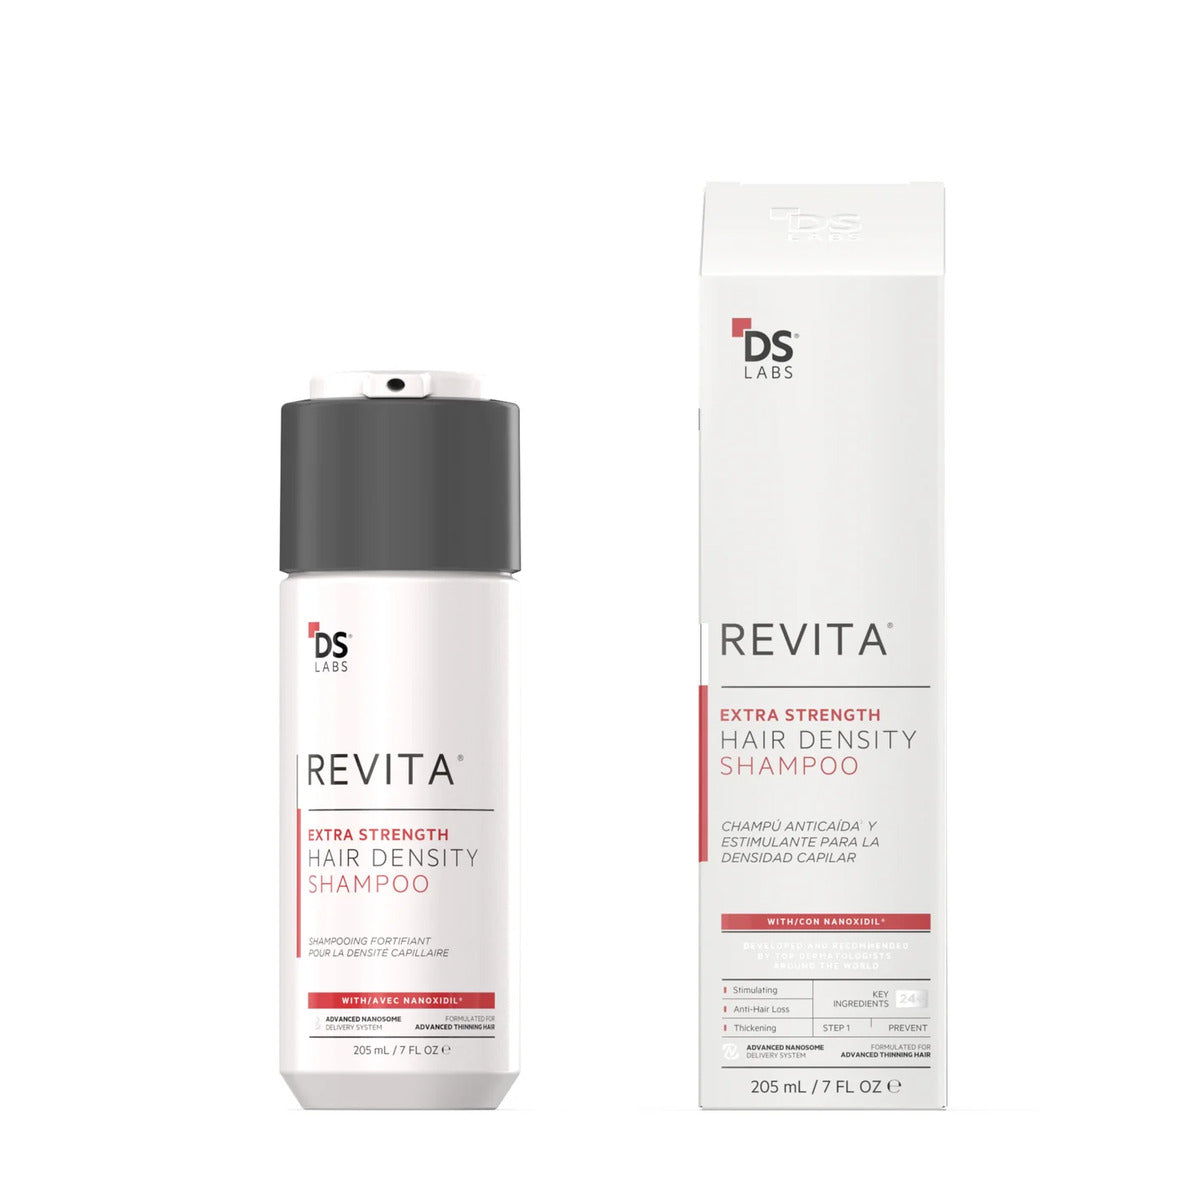 Revita extra strength hair density shampoo 205ml.